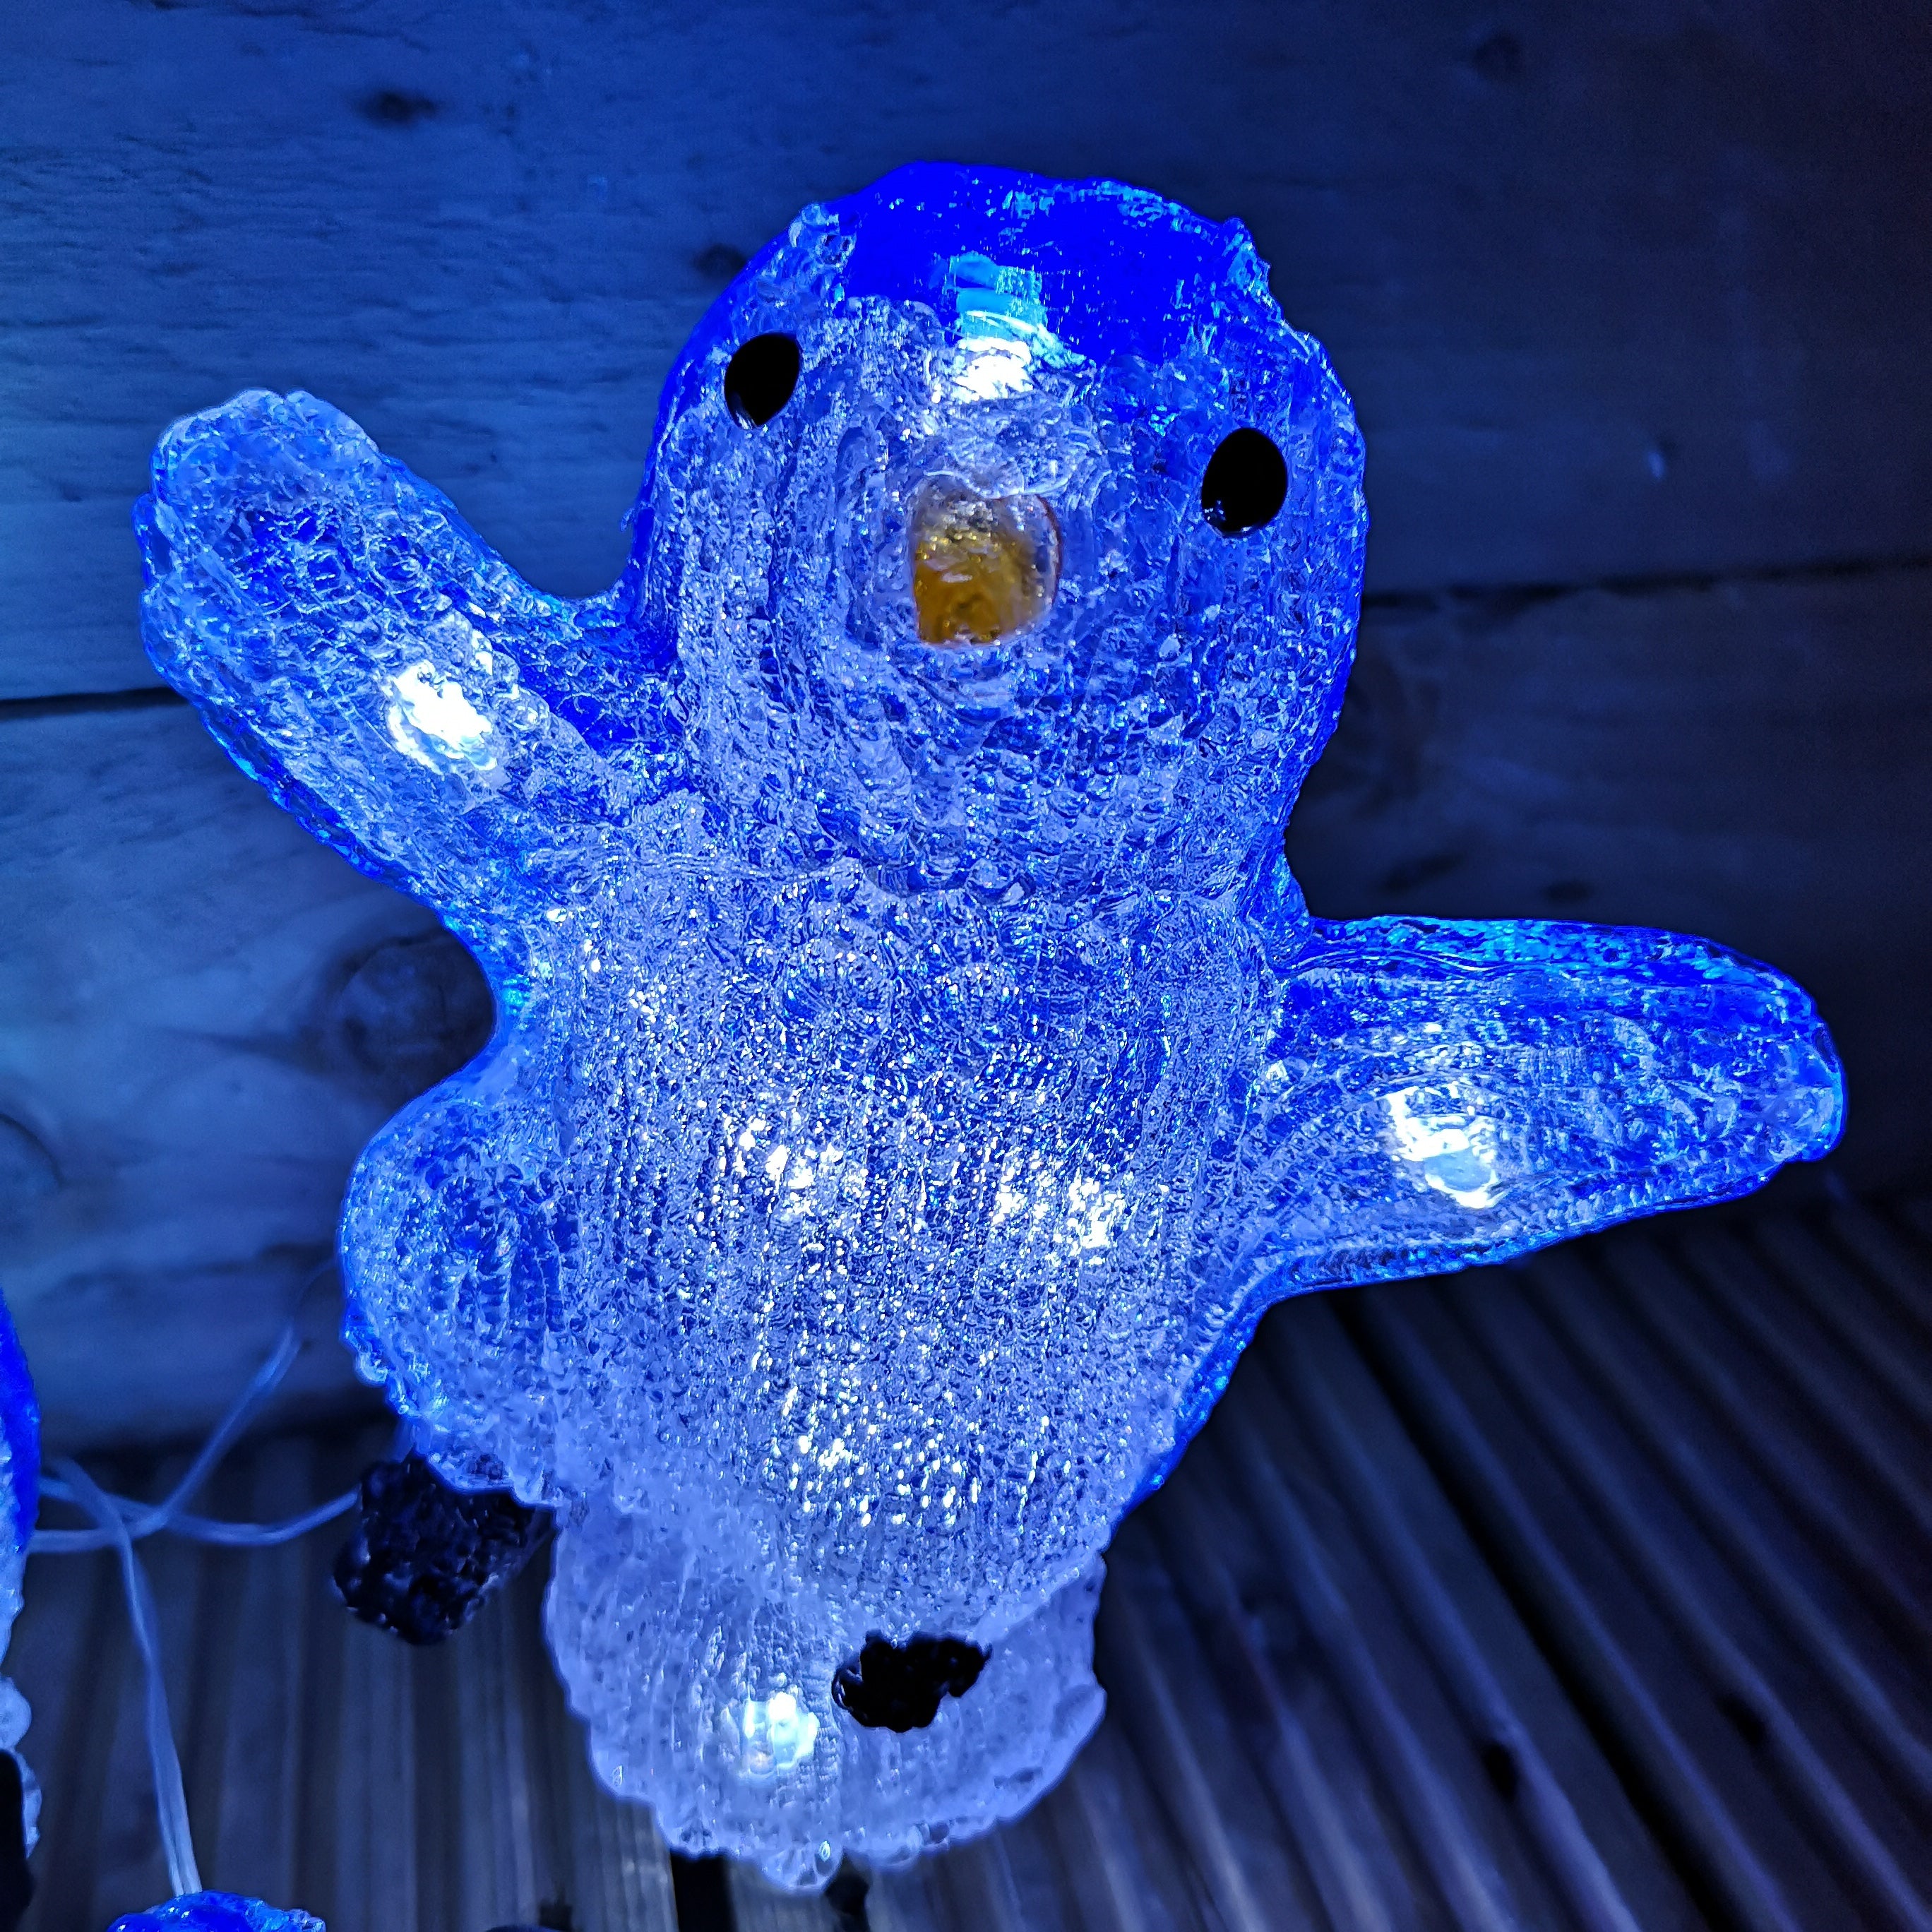 23cm Set of 3 Acrylic Ice White LED Penguins Indoor Outdoor Christmas Decoration